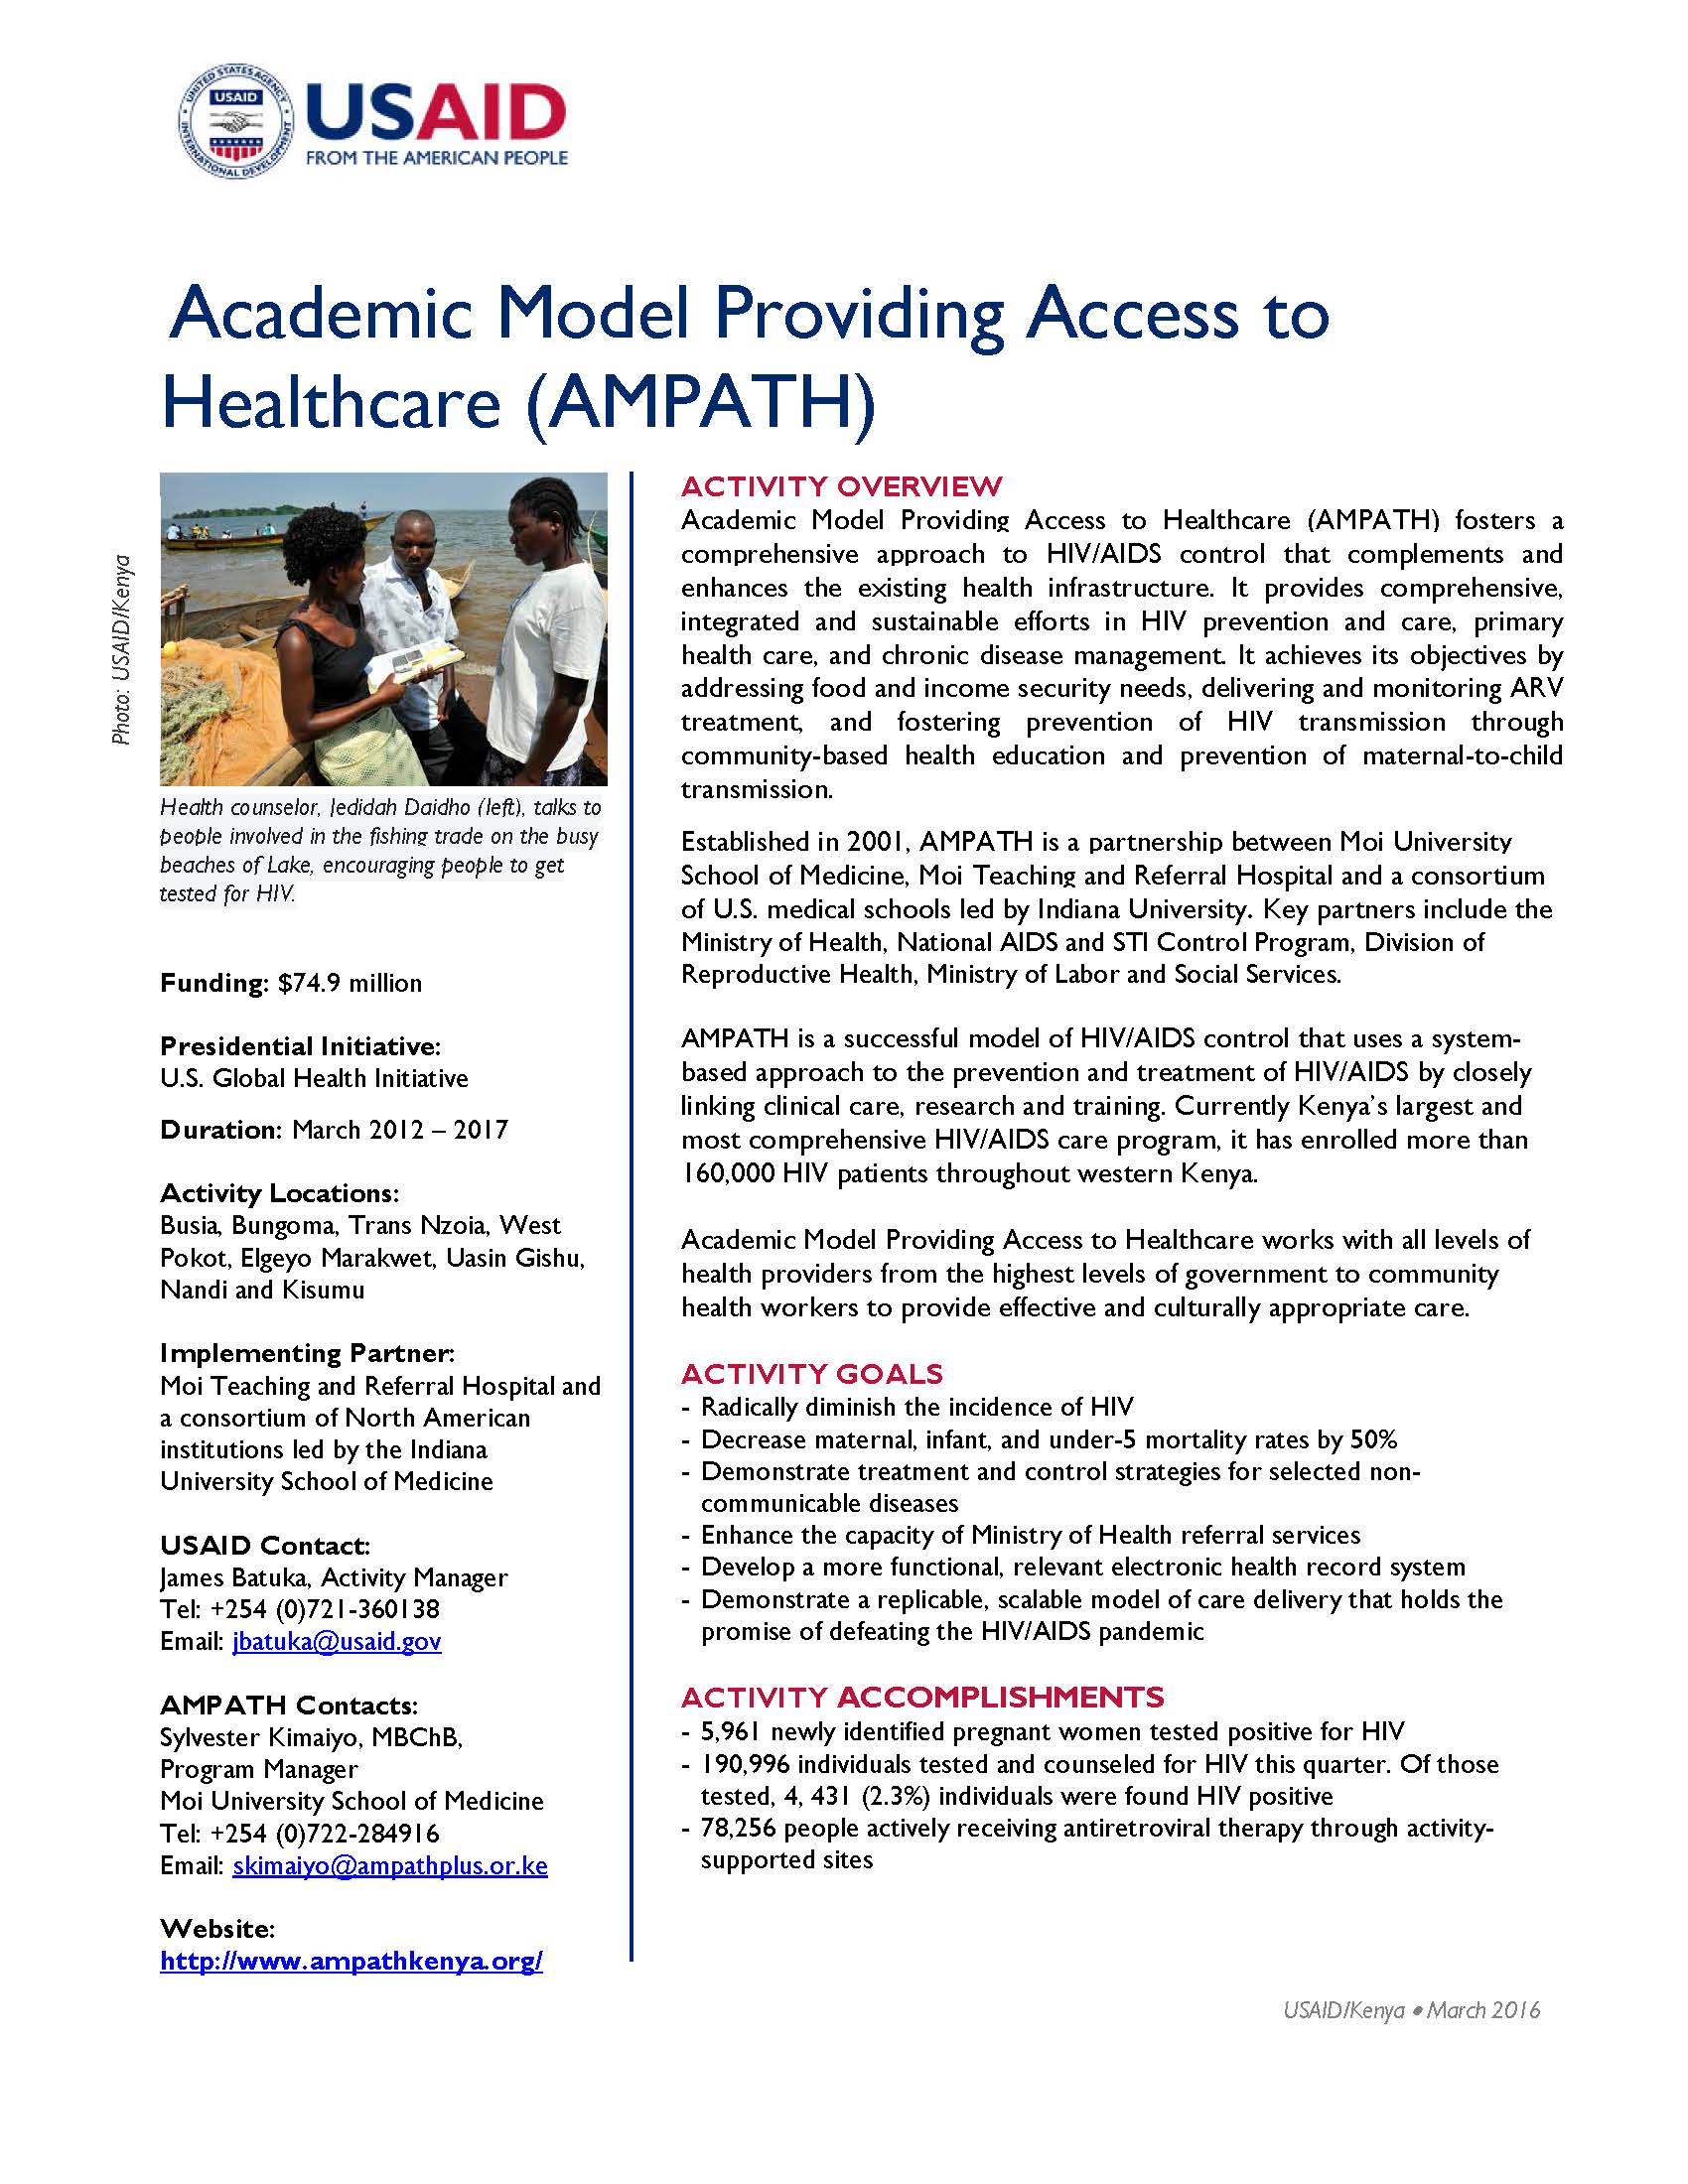 Academic Model Providing Access to Healthcare (AMPATH)